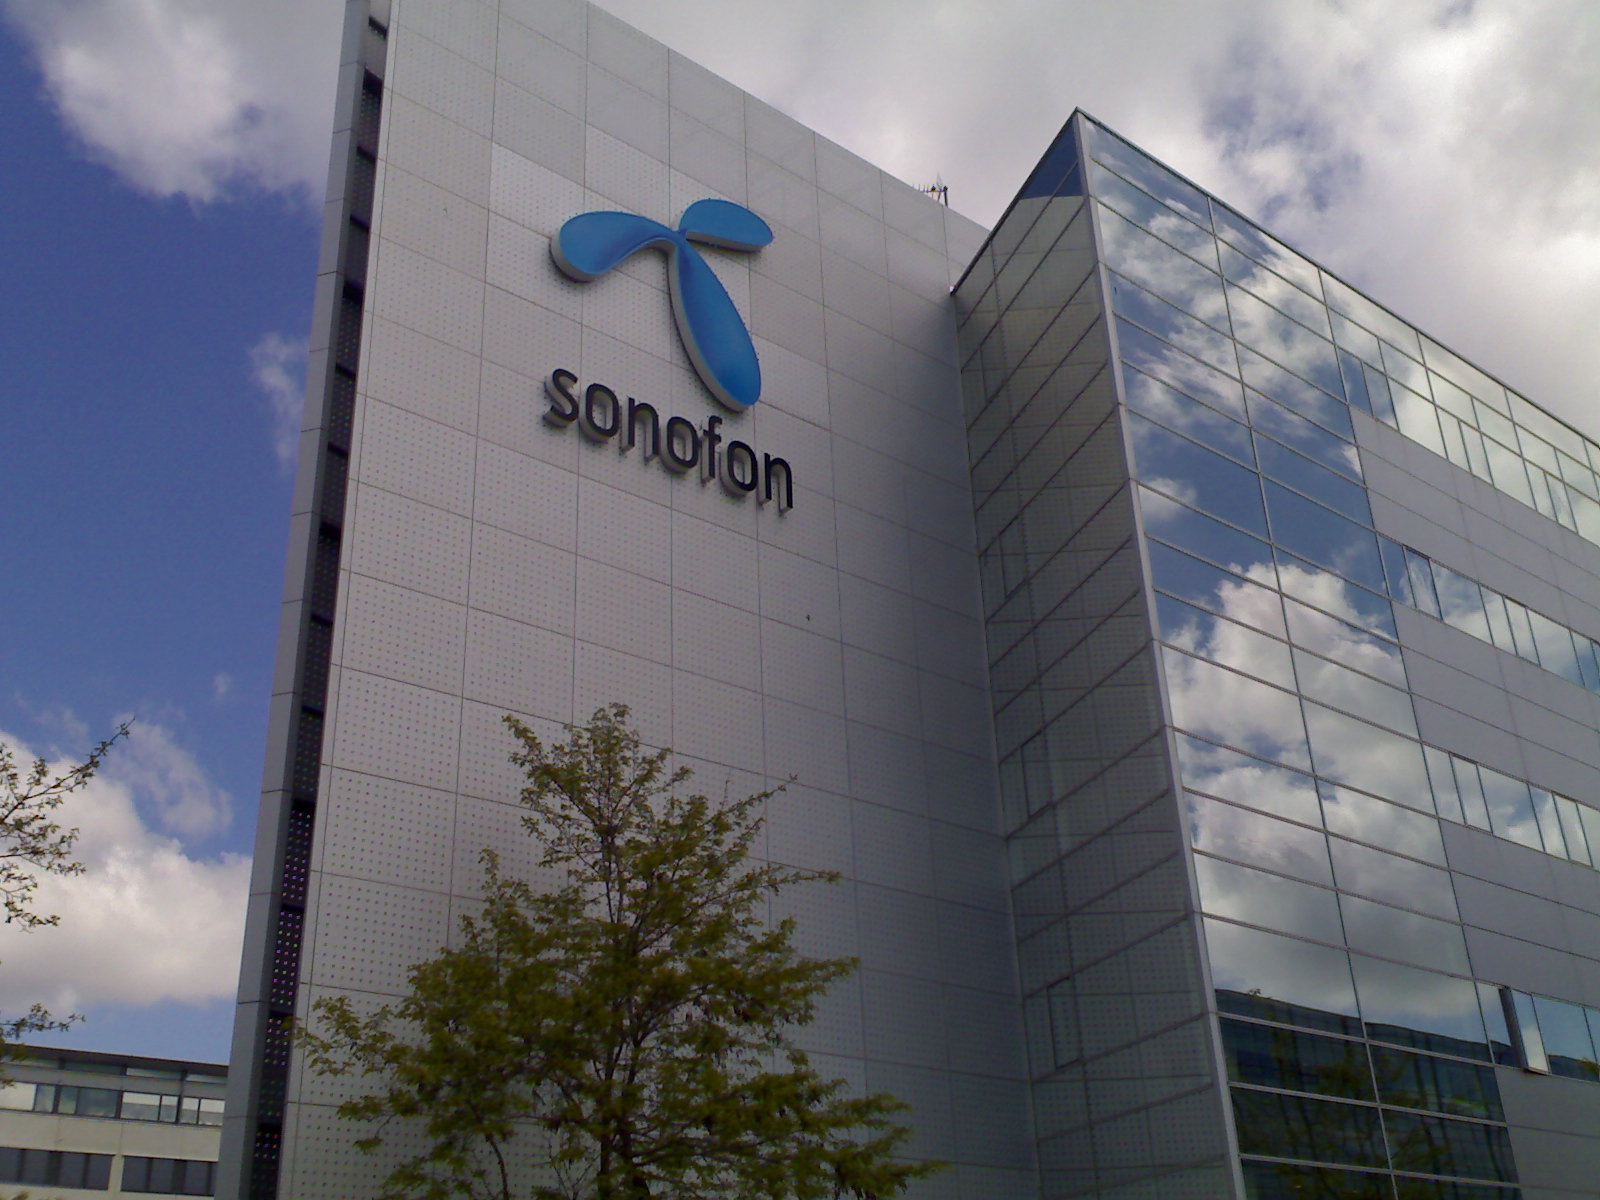 Sonofon Building in Copenhagen